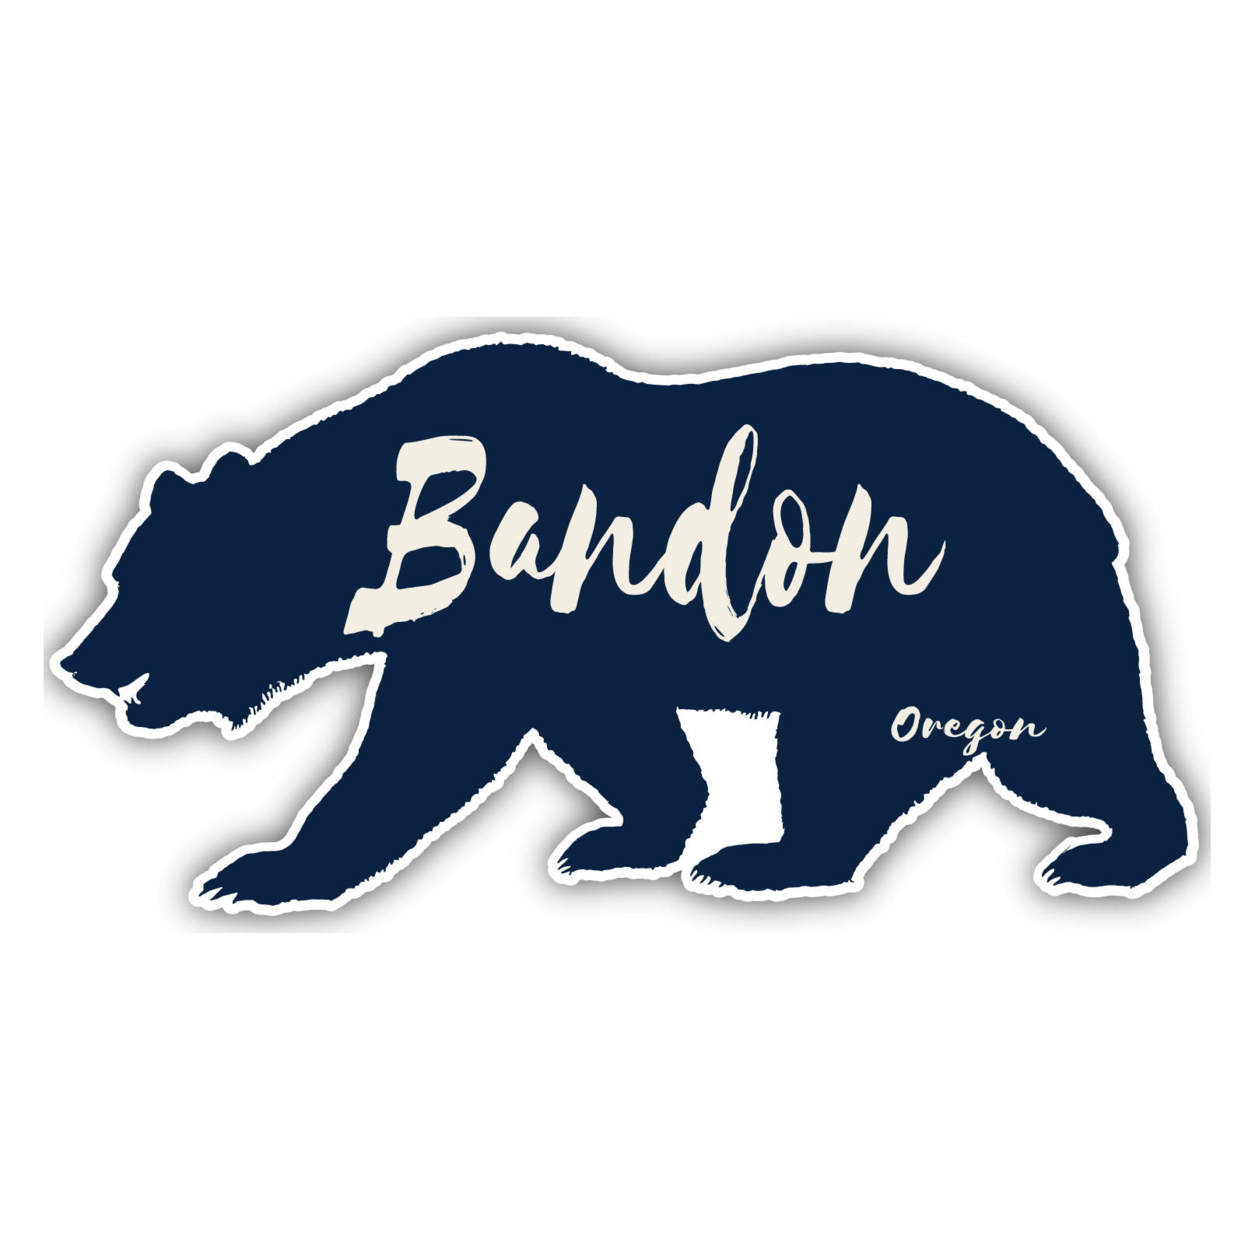 Bandon Oregon Souvenir Decorative Stickers (Choose Theme And Size) - 4-Pack, 2-Inch, Tent